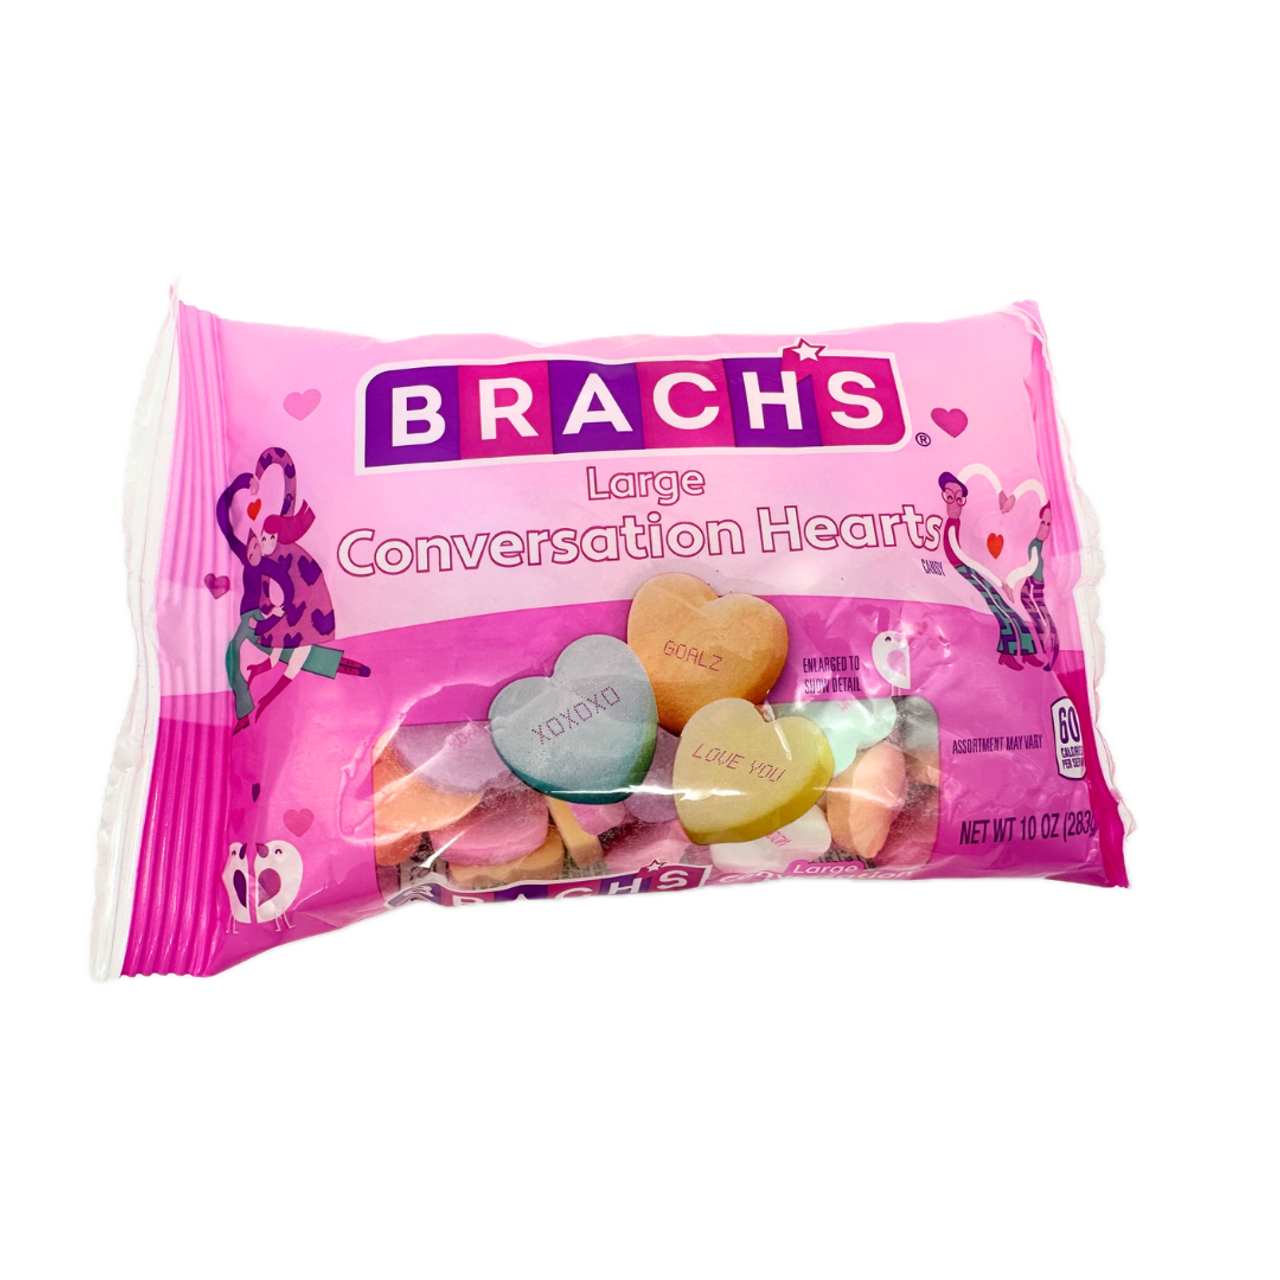 Brach's Large Conversation Hearts - 10oz - Blair Candy Company